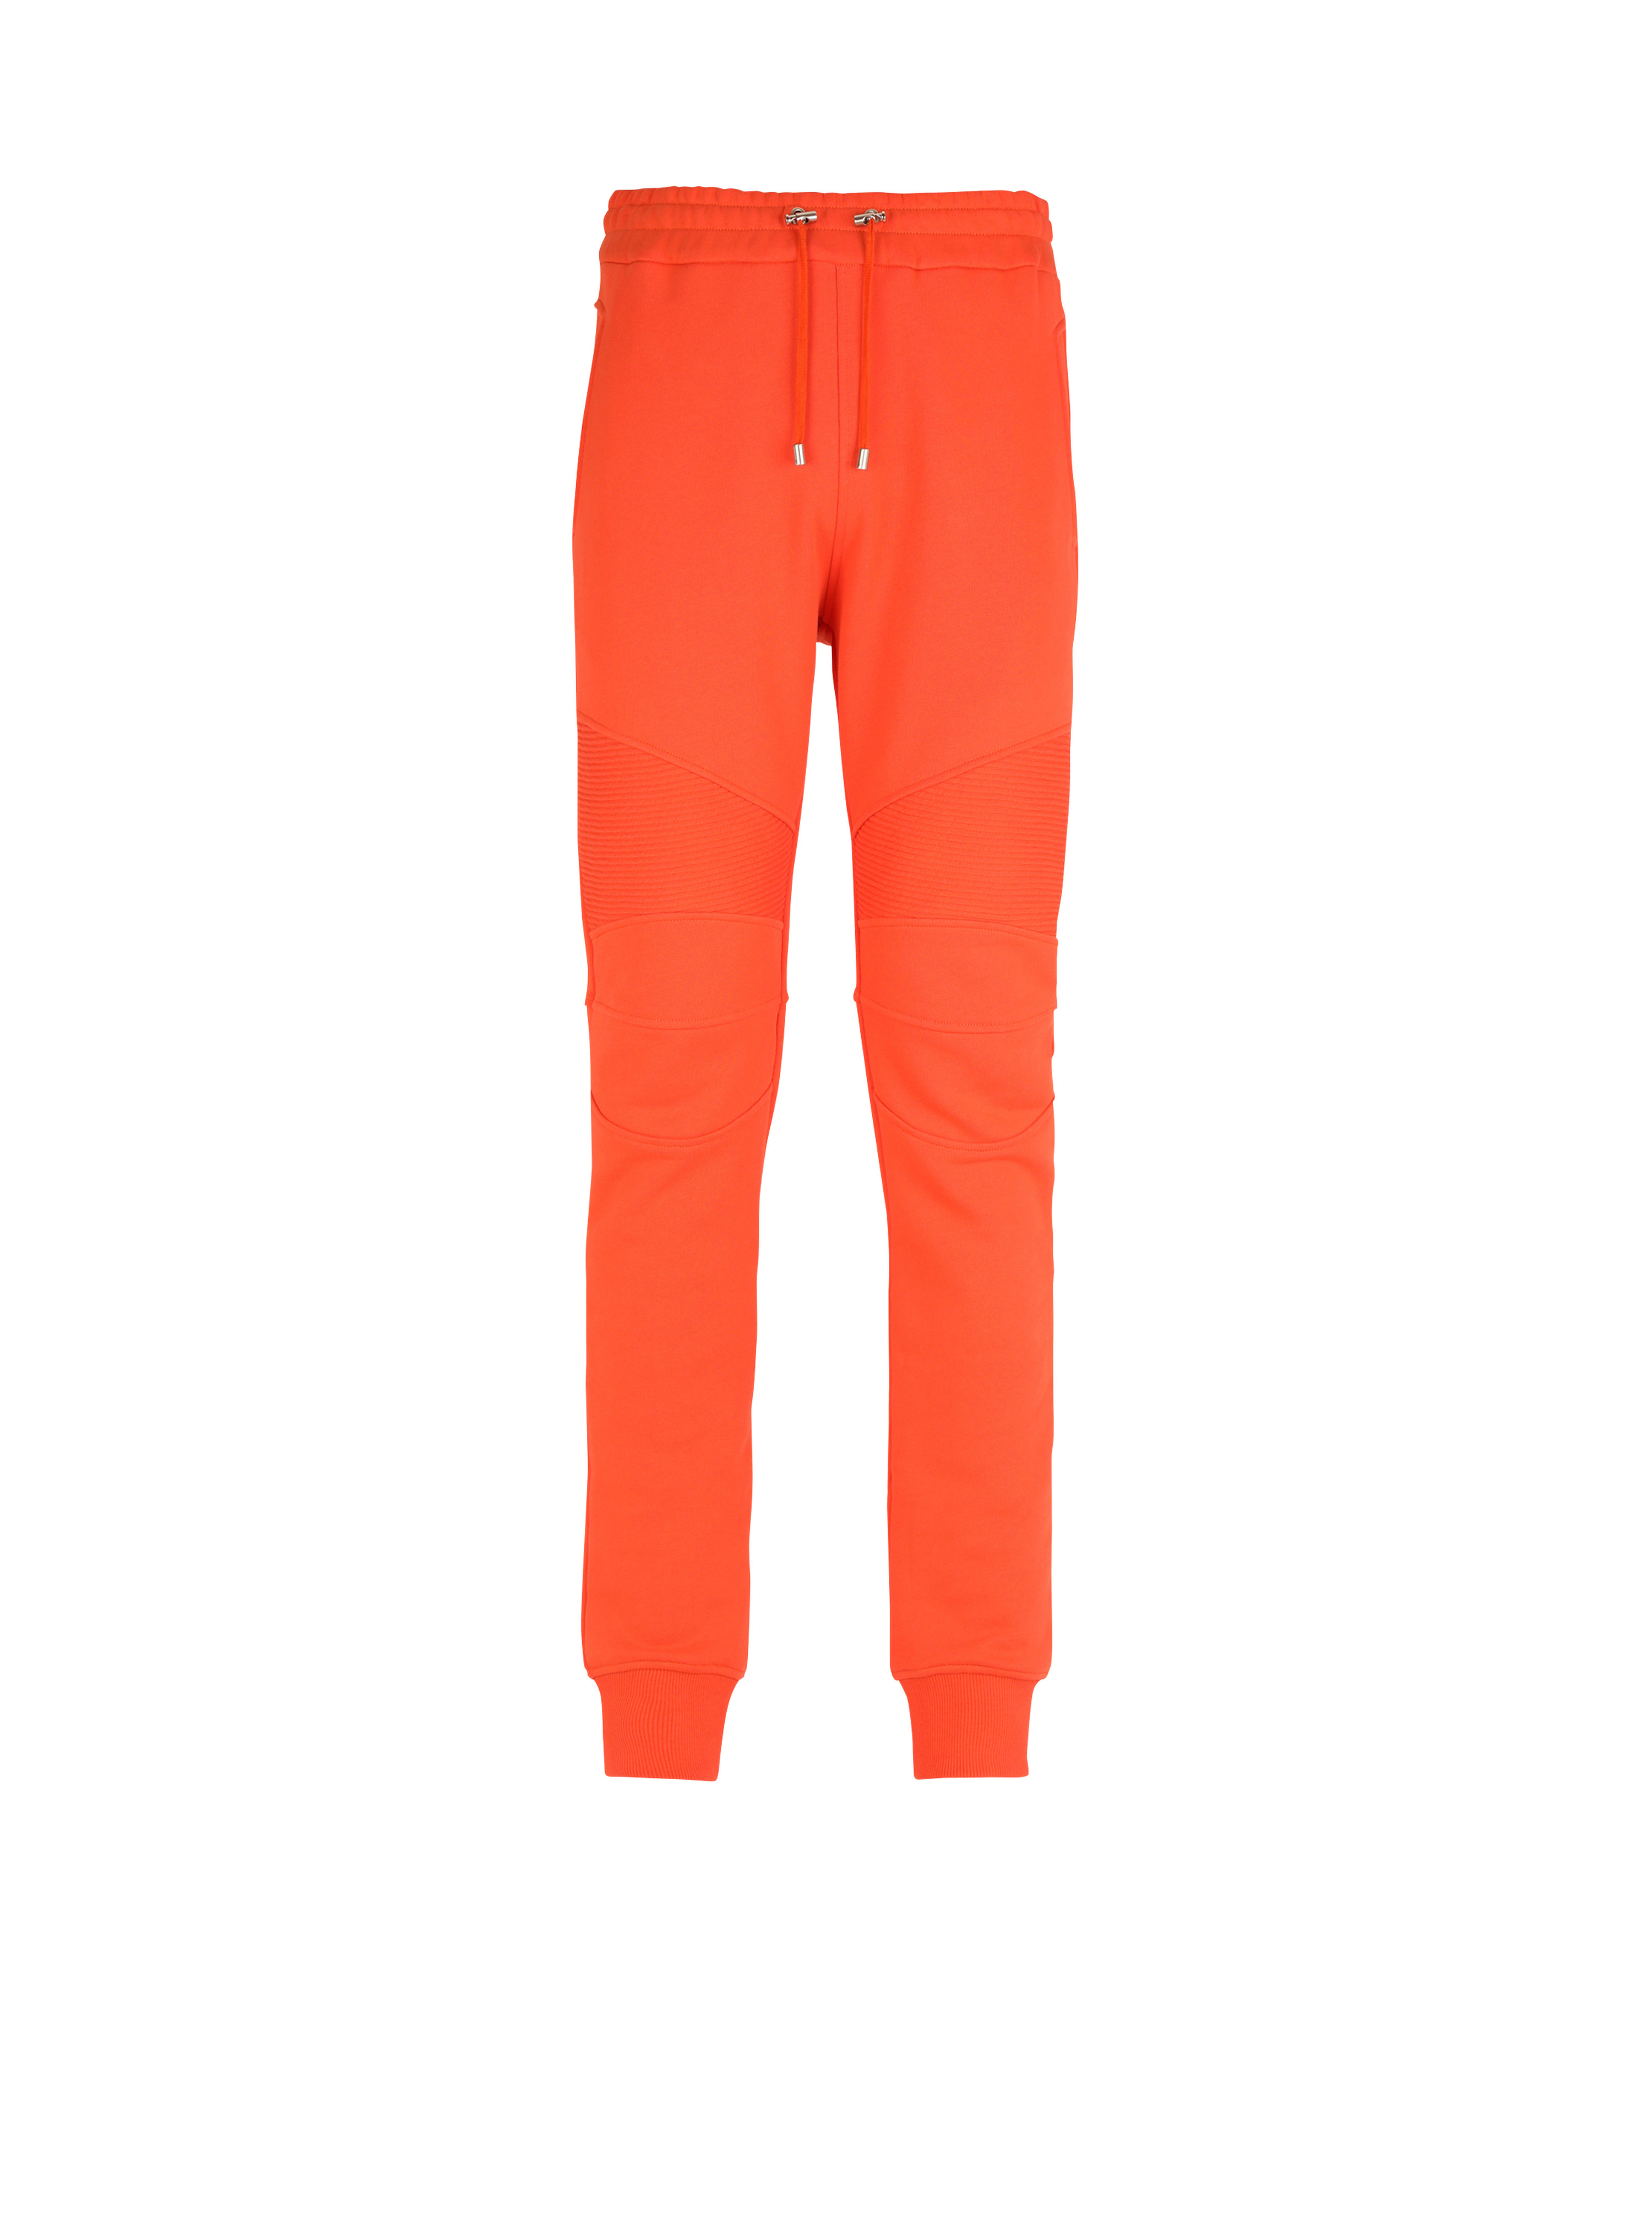 Orange cotton sweatpants with Balmain Paris logo print, orange